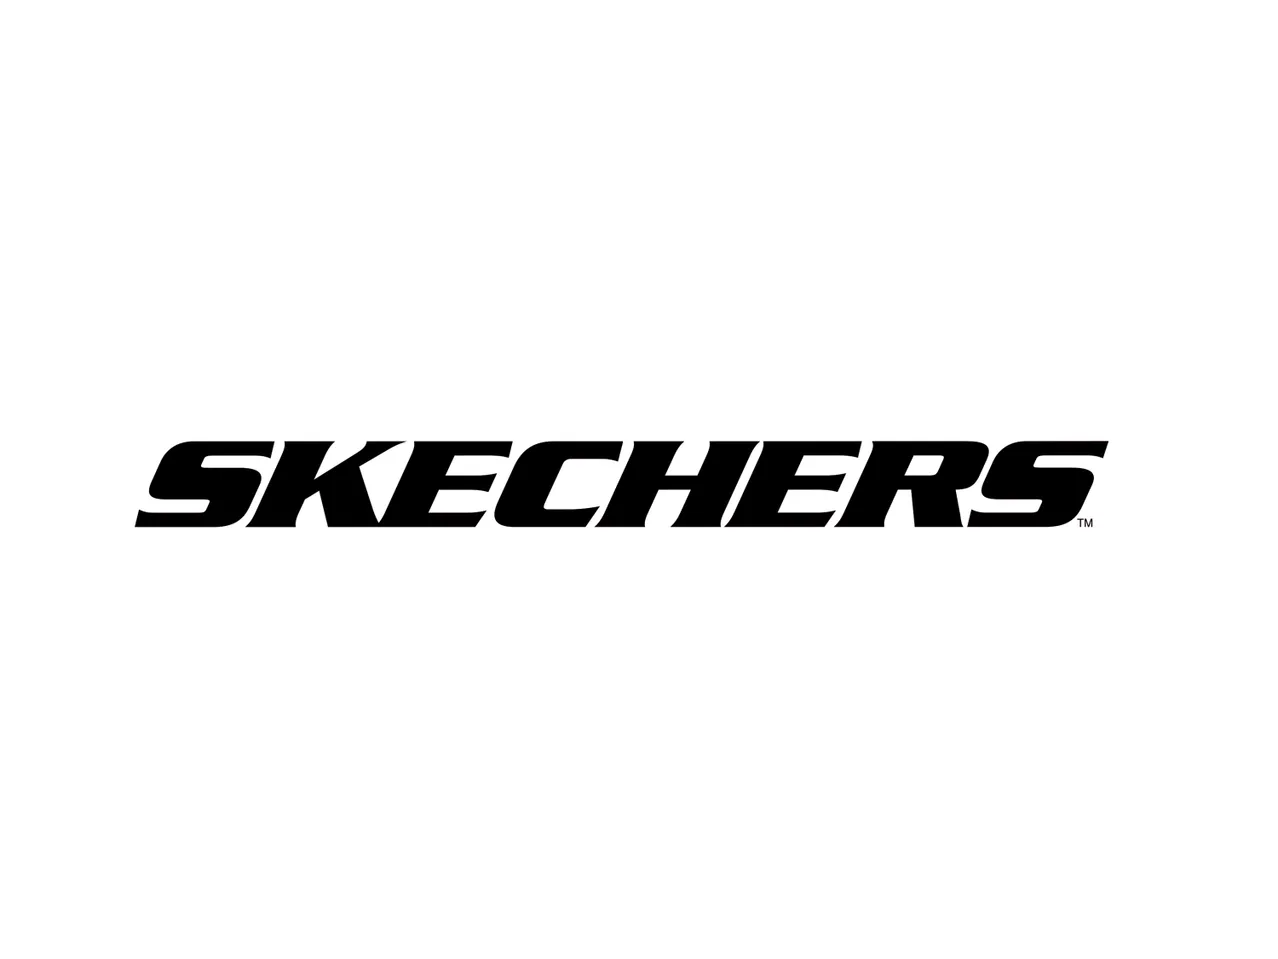 Plecak Skechers® , cena 99 PLN 
Plecak Skechers® 2 wzory 
- 40 x 30 x 13,5 cm ...